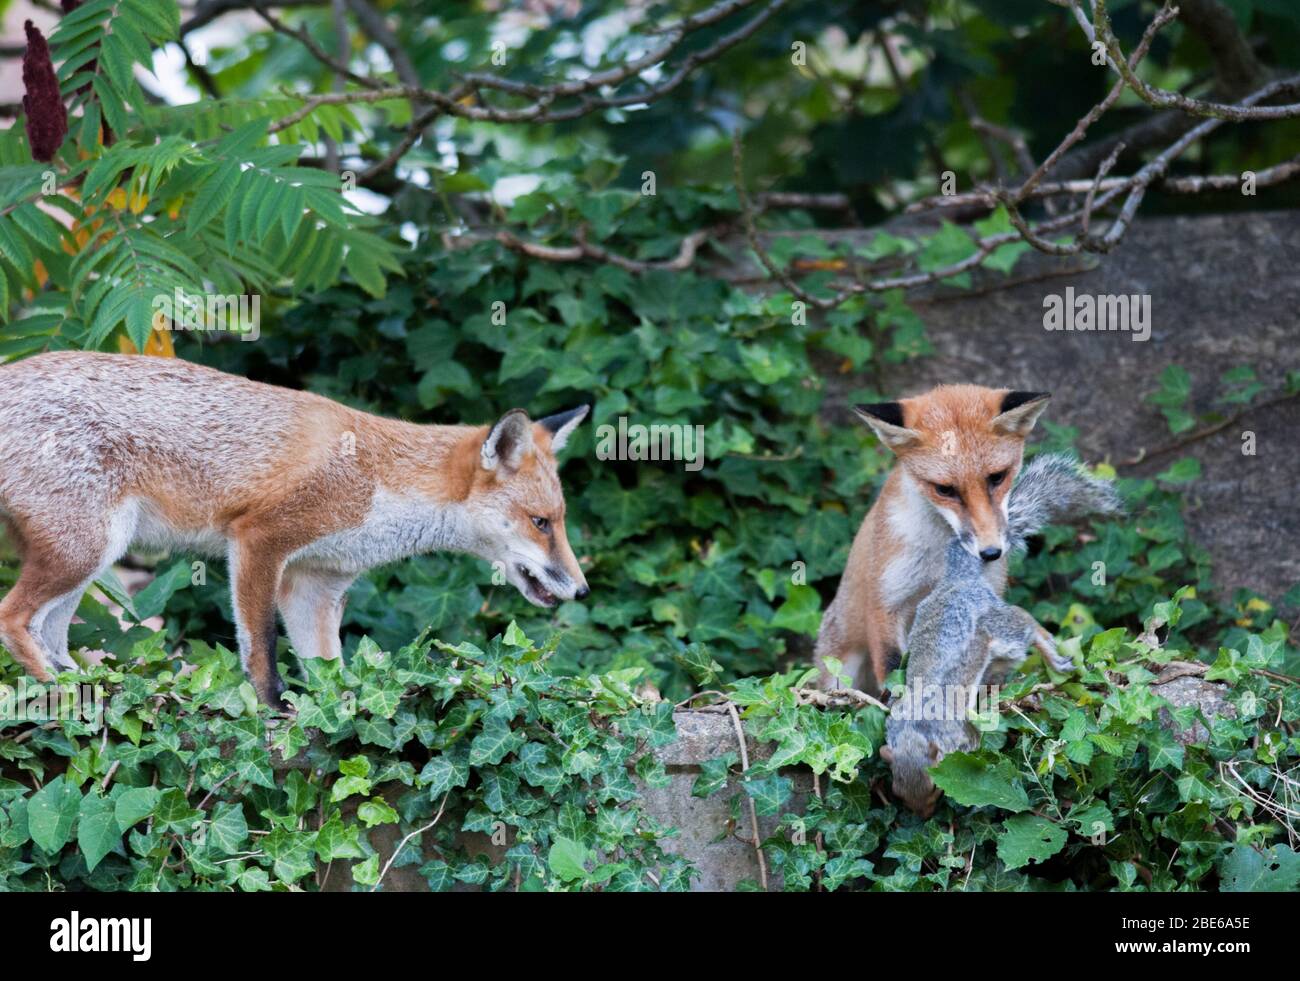 Two Red Foxes, Vulpes vulpes, in a suburban garden catch a Grey squirrel, Sciurus carolinensis, London, United Kingdom Stock Photo